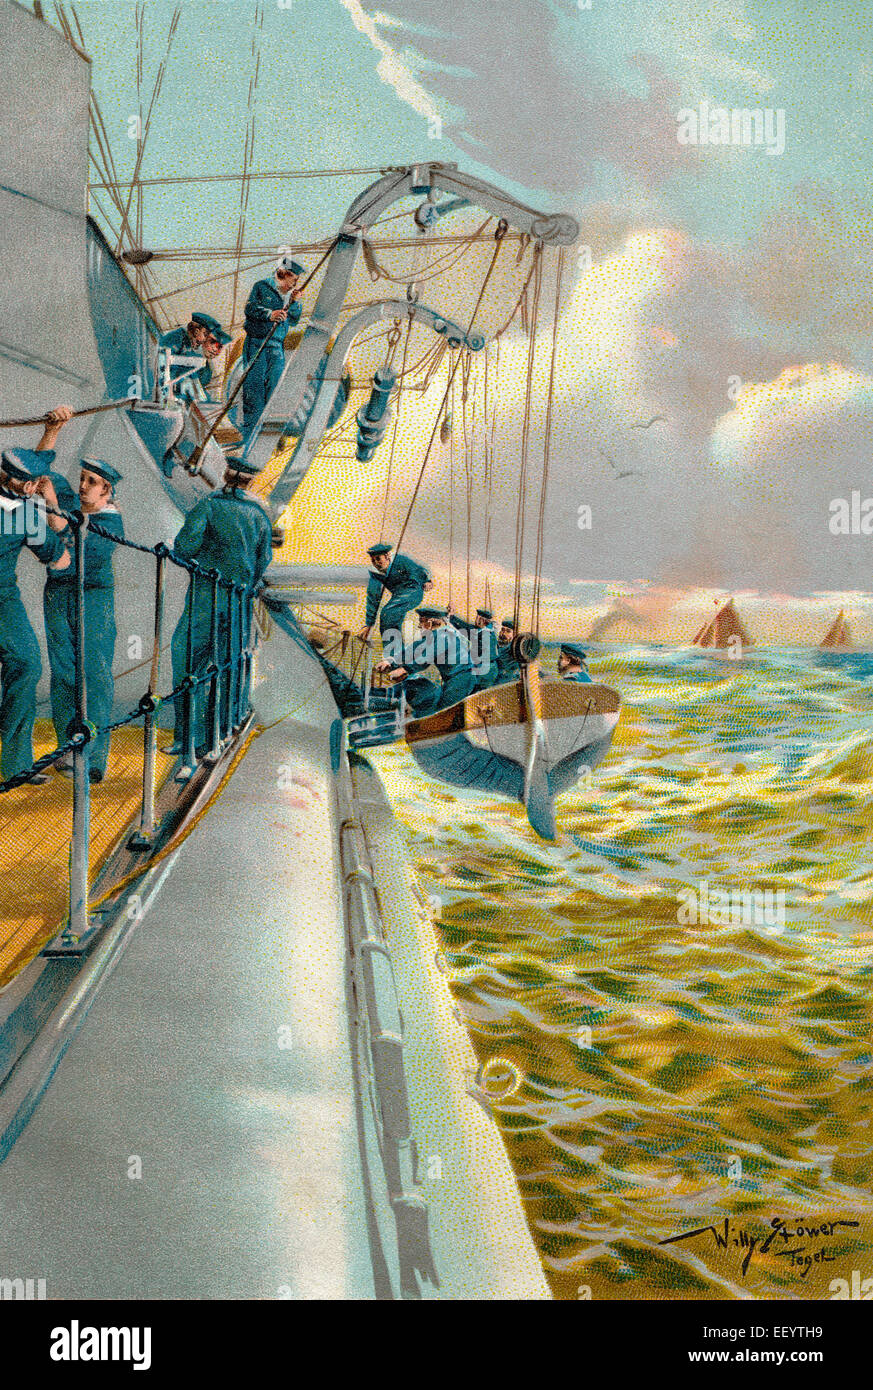 Las maniobras con un bote salvavidas, c. 1900, Alemania, Bootsmanöver auf Ver mit einem Rettungsboot, ca. 1900, Deutschland Foto de stock